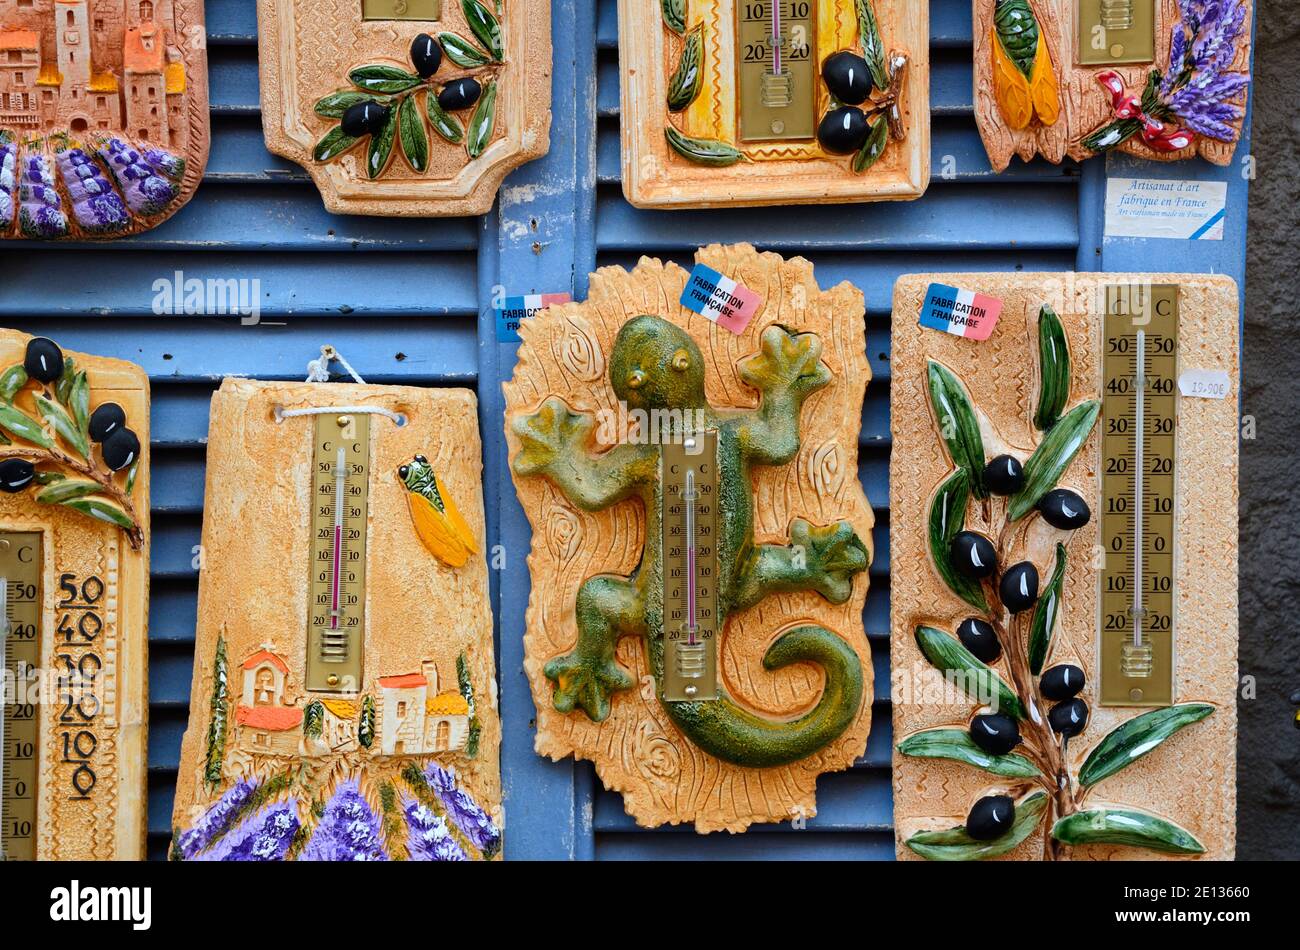 Kitsch Souvenir Thermometer mit Provence Themen inkl. Oliven Lavendel & Eidechsen oder Geckos in Gift Shop oder Stall Le Castellet Provence Frankreich Stockfoto